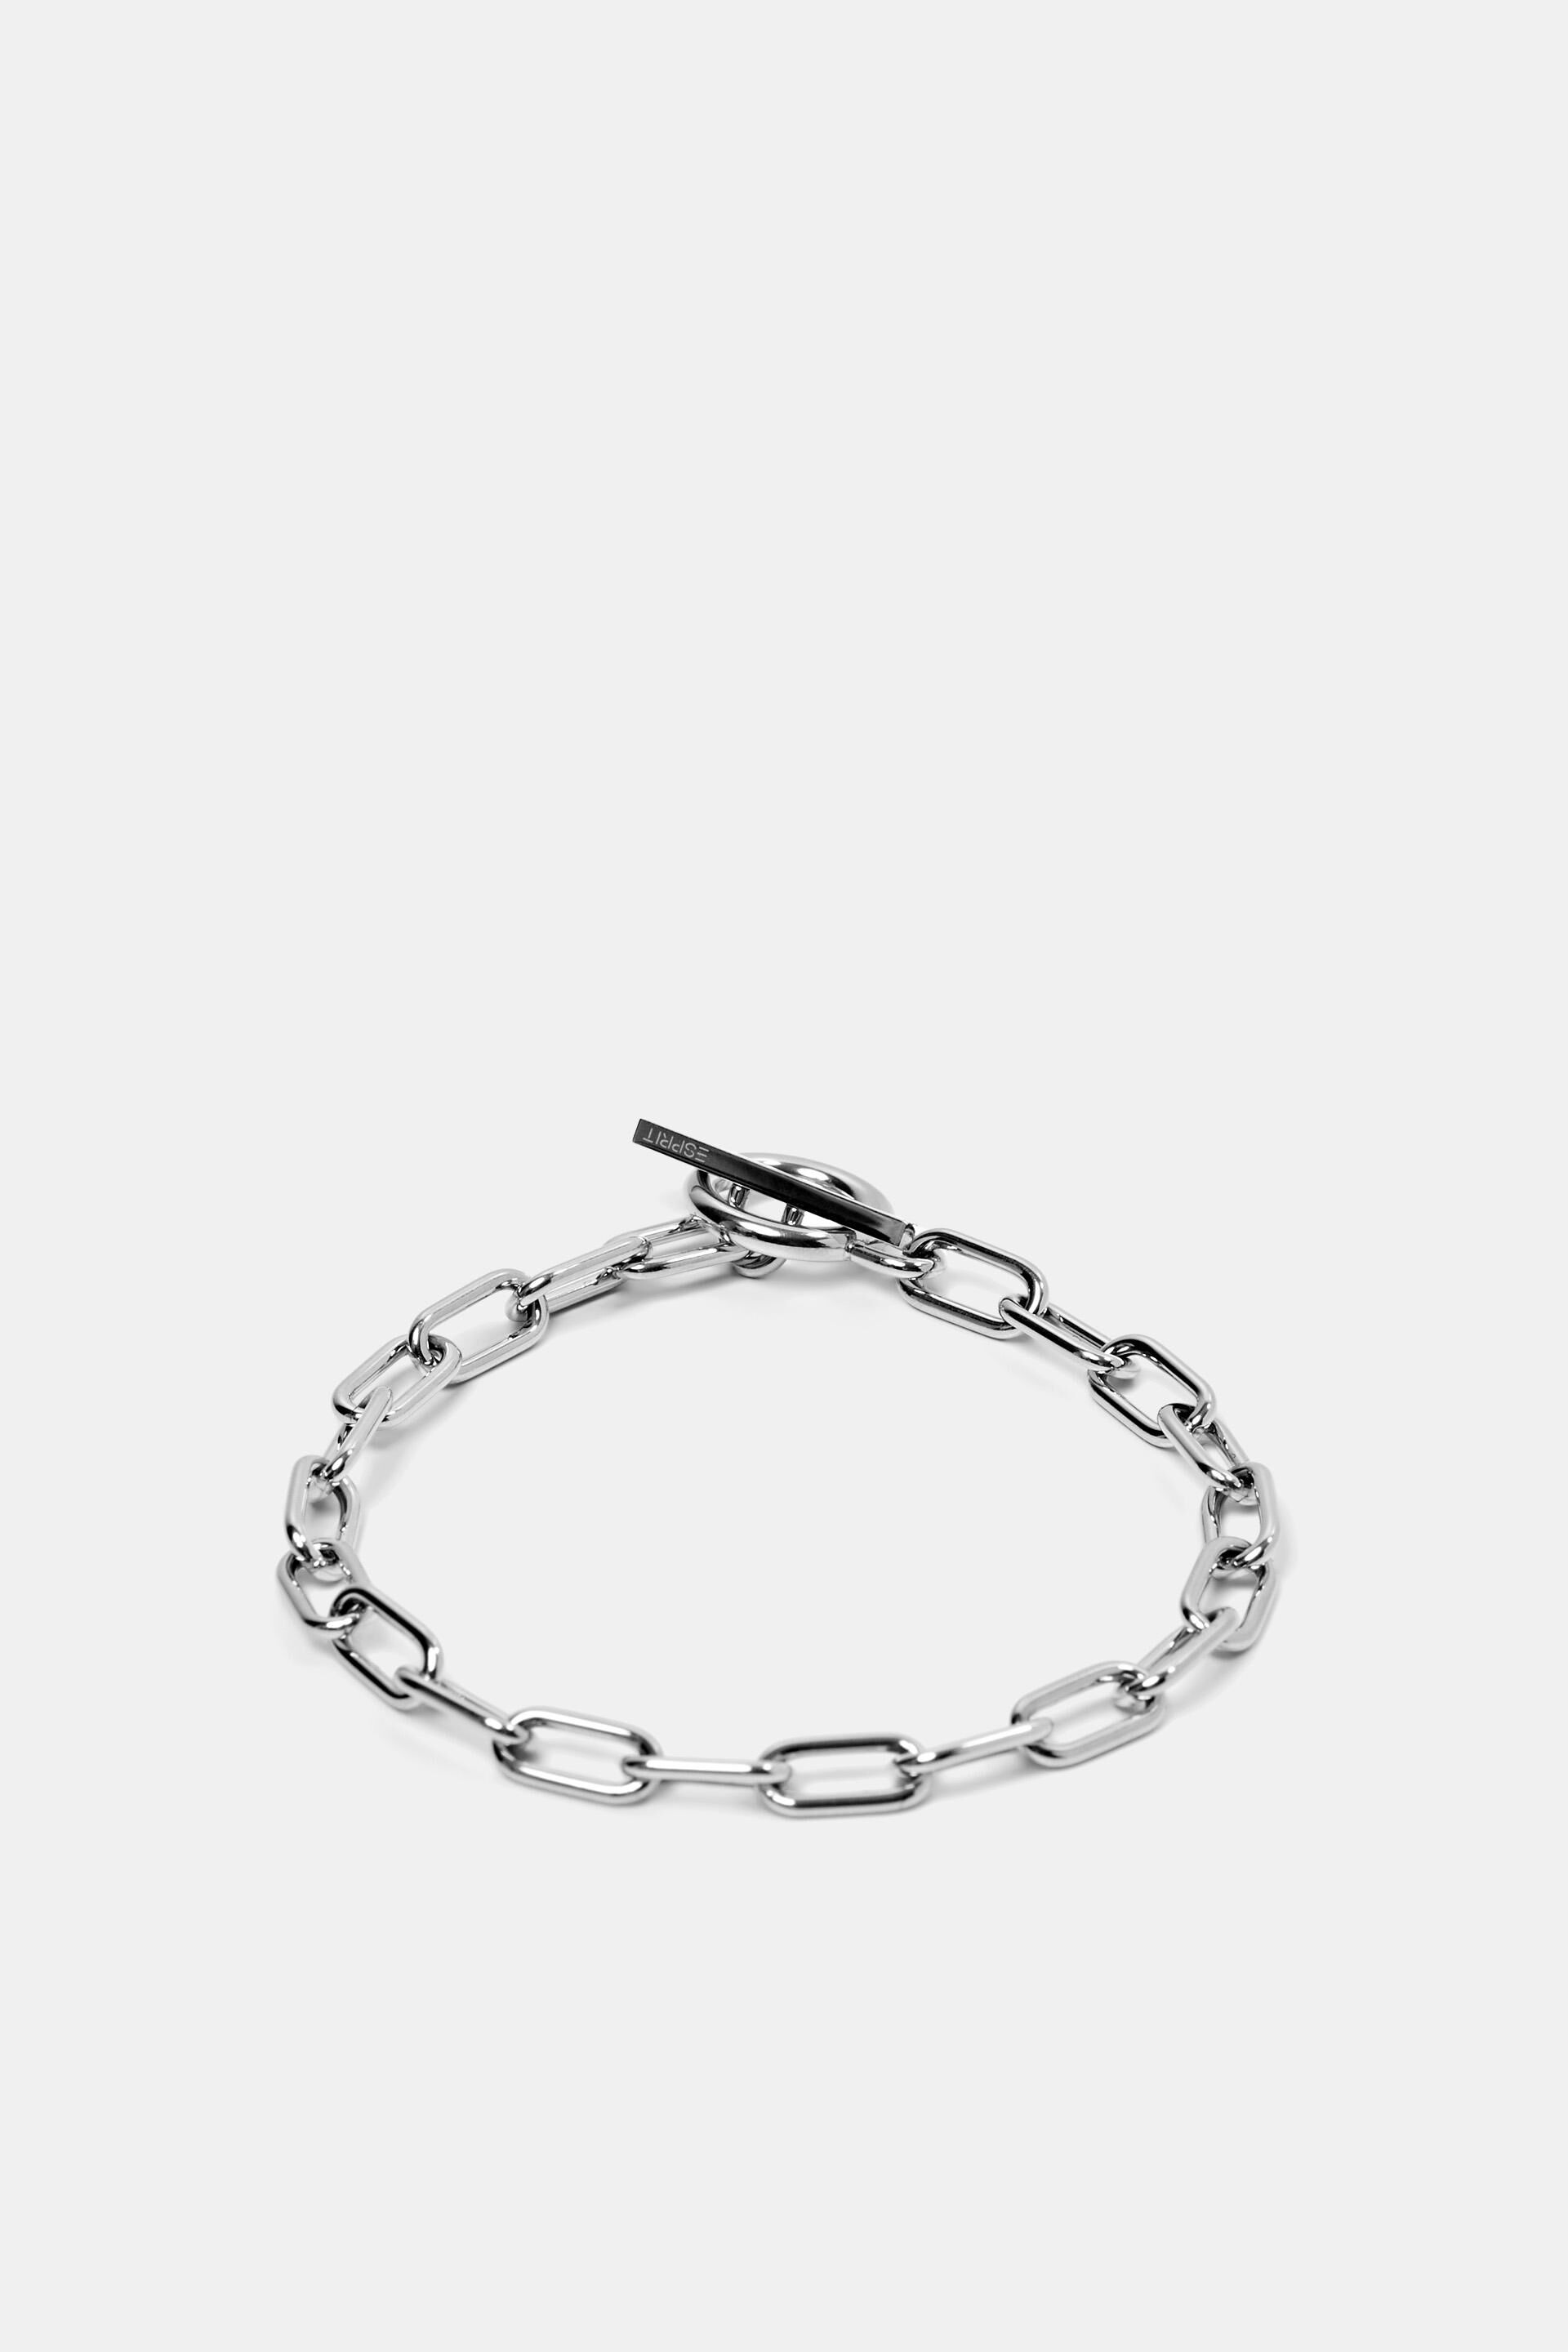 Esprit steel bracelet, Chain stainless